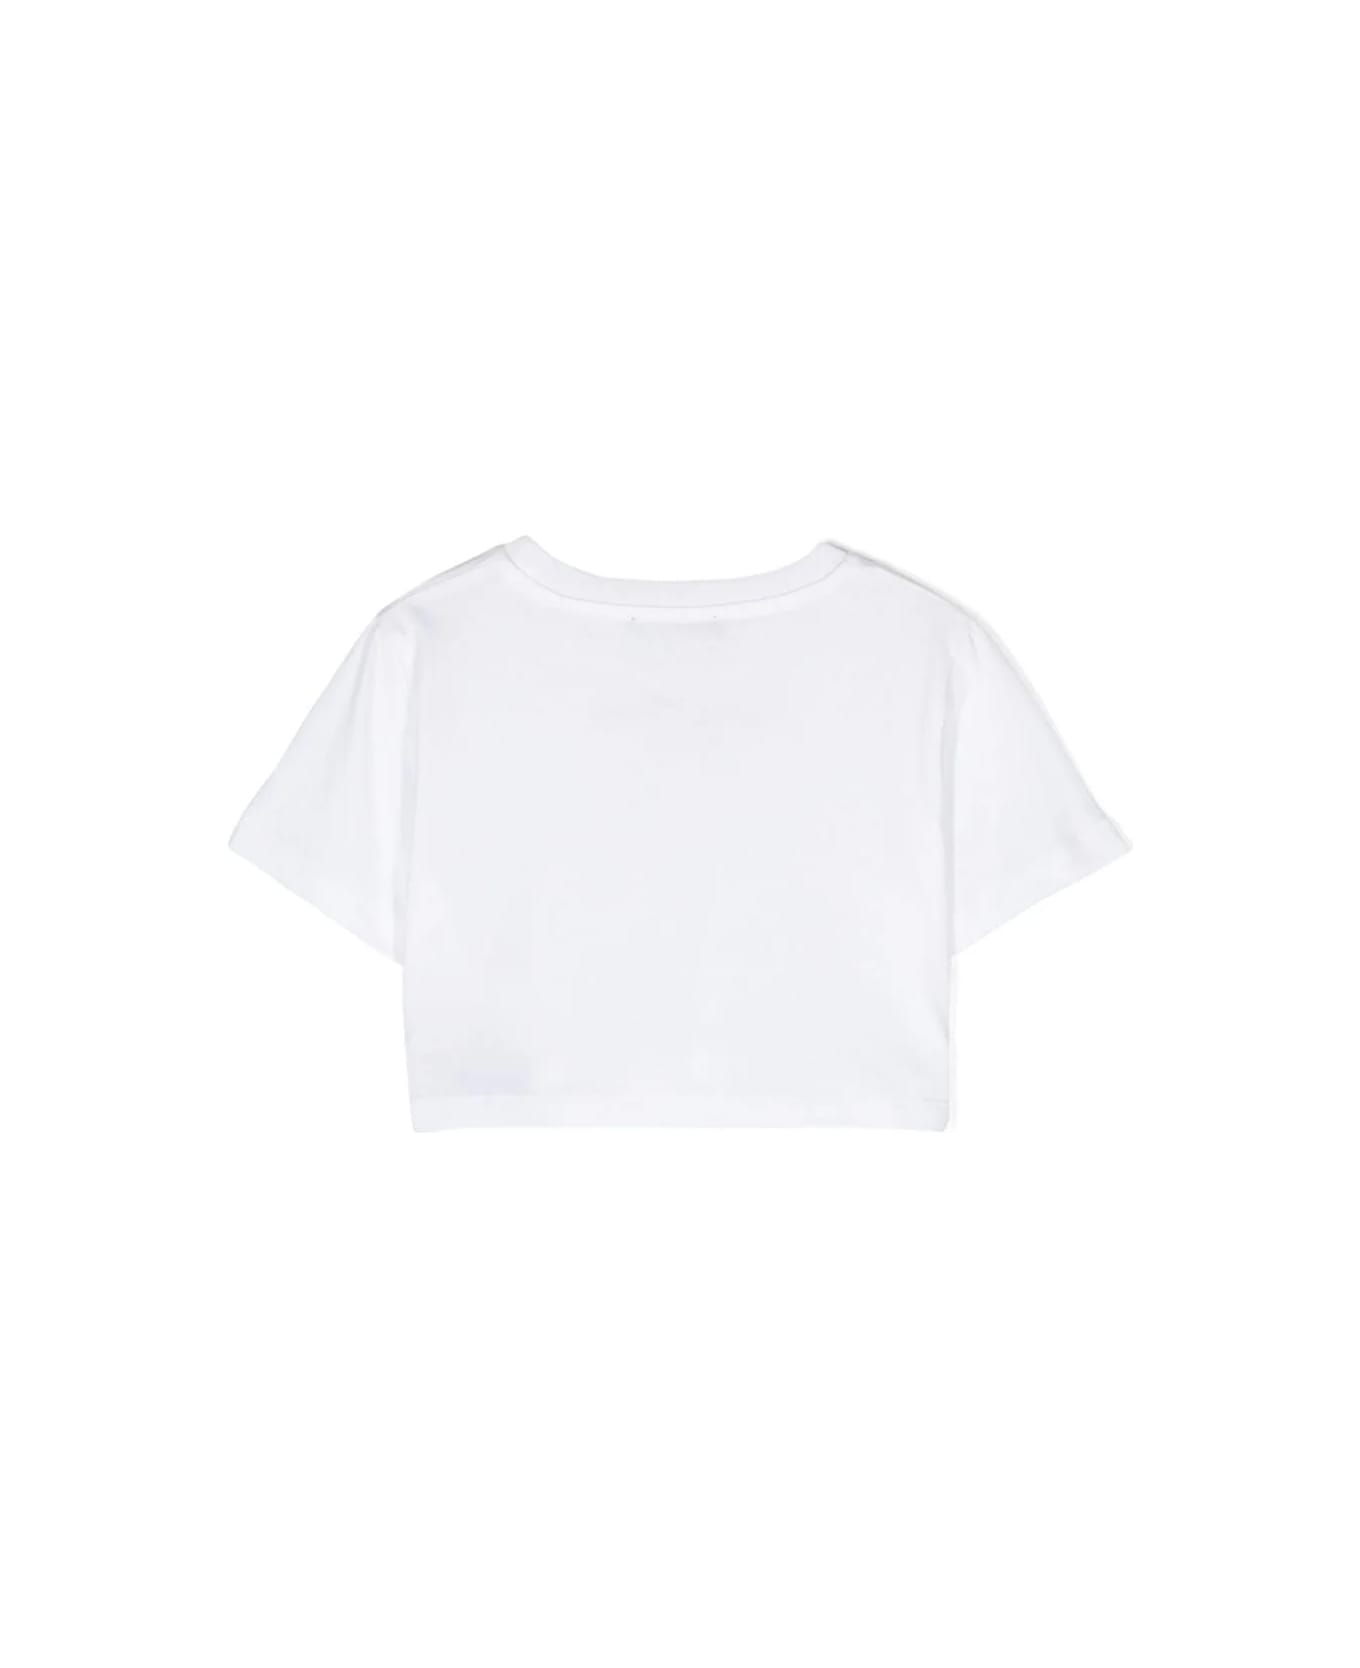 Balmain T-shirt Con Logo - White